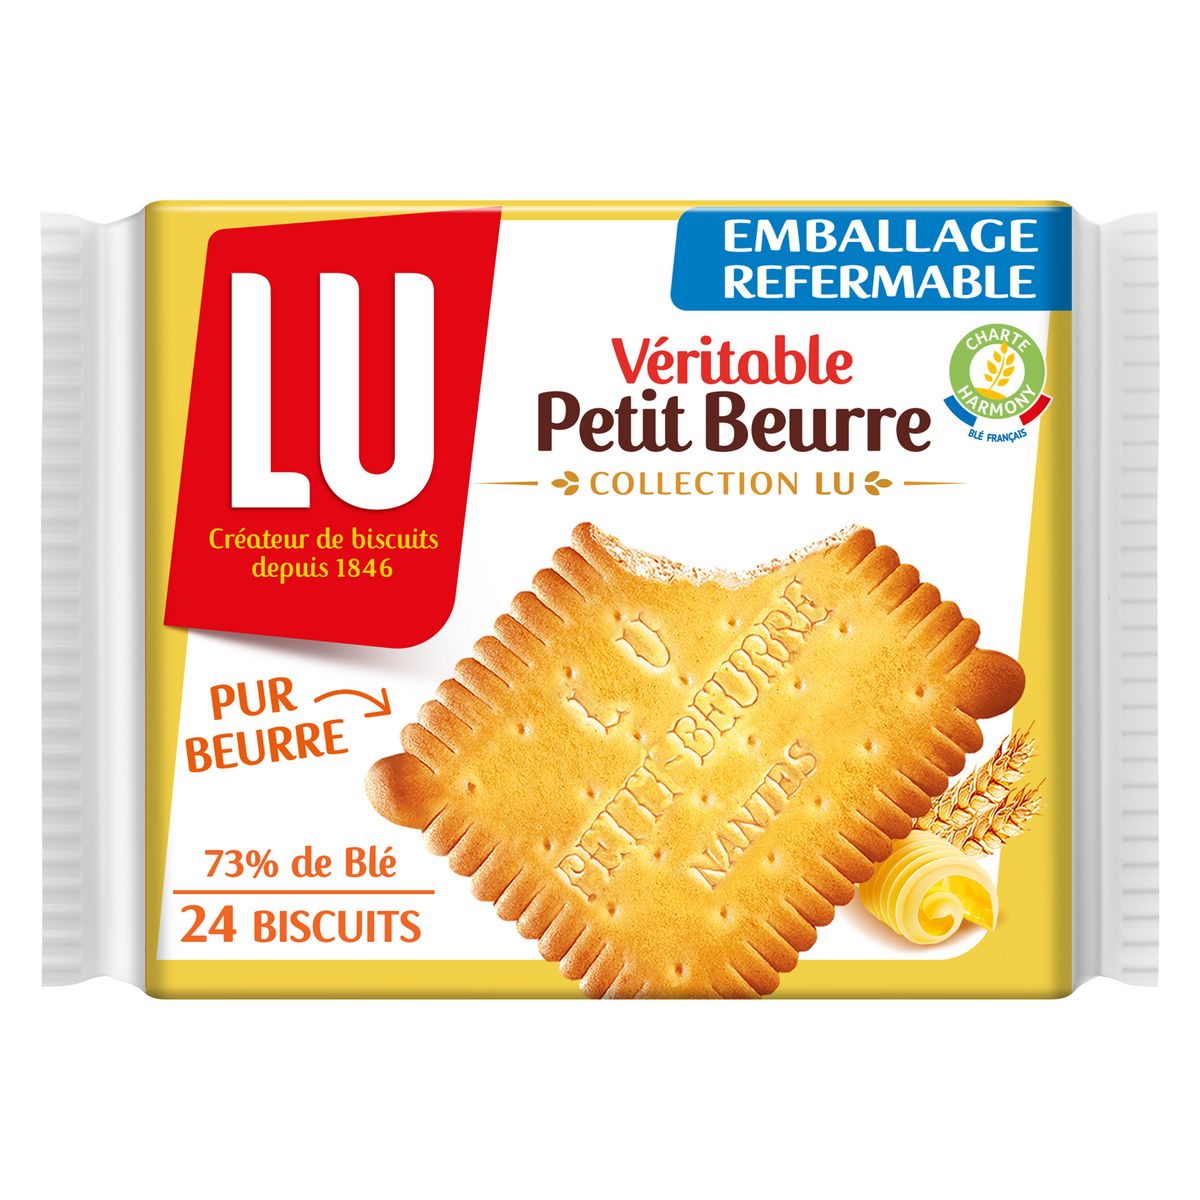 LU Véritable petit beurre, emballage refermable 24 biscuits 200g pas cher - Auchan.fr